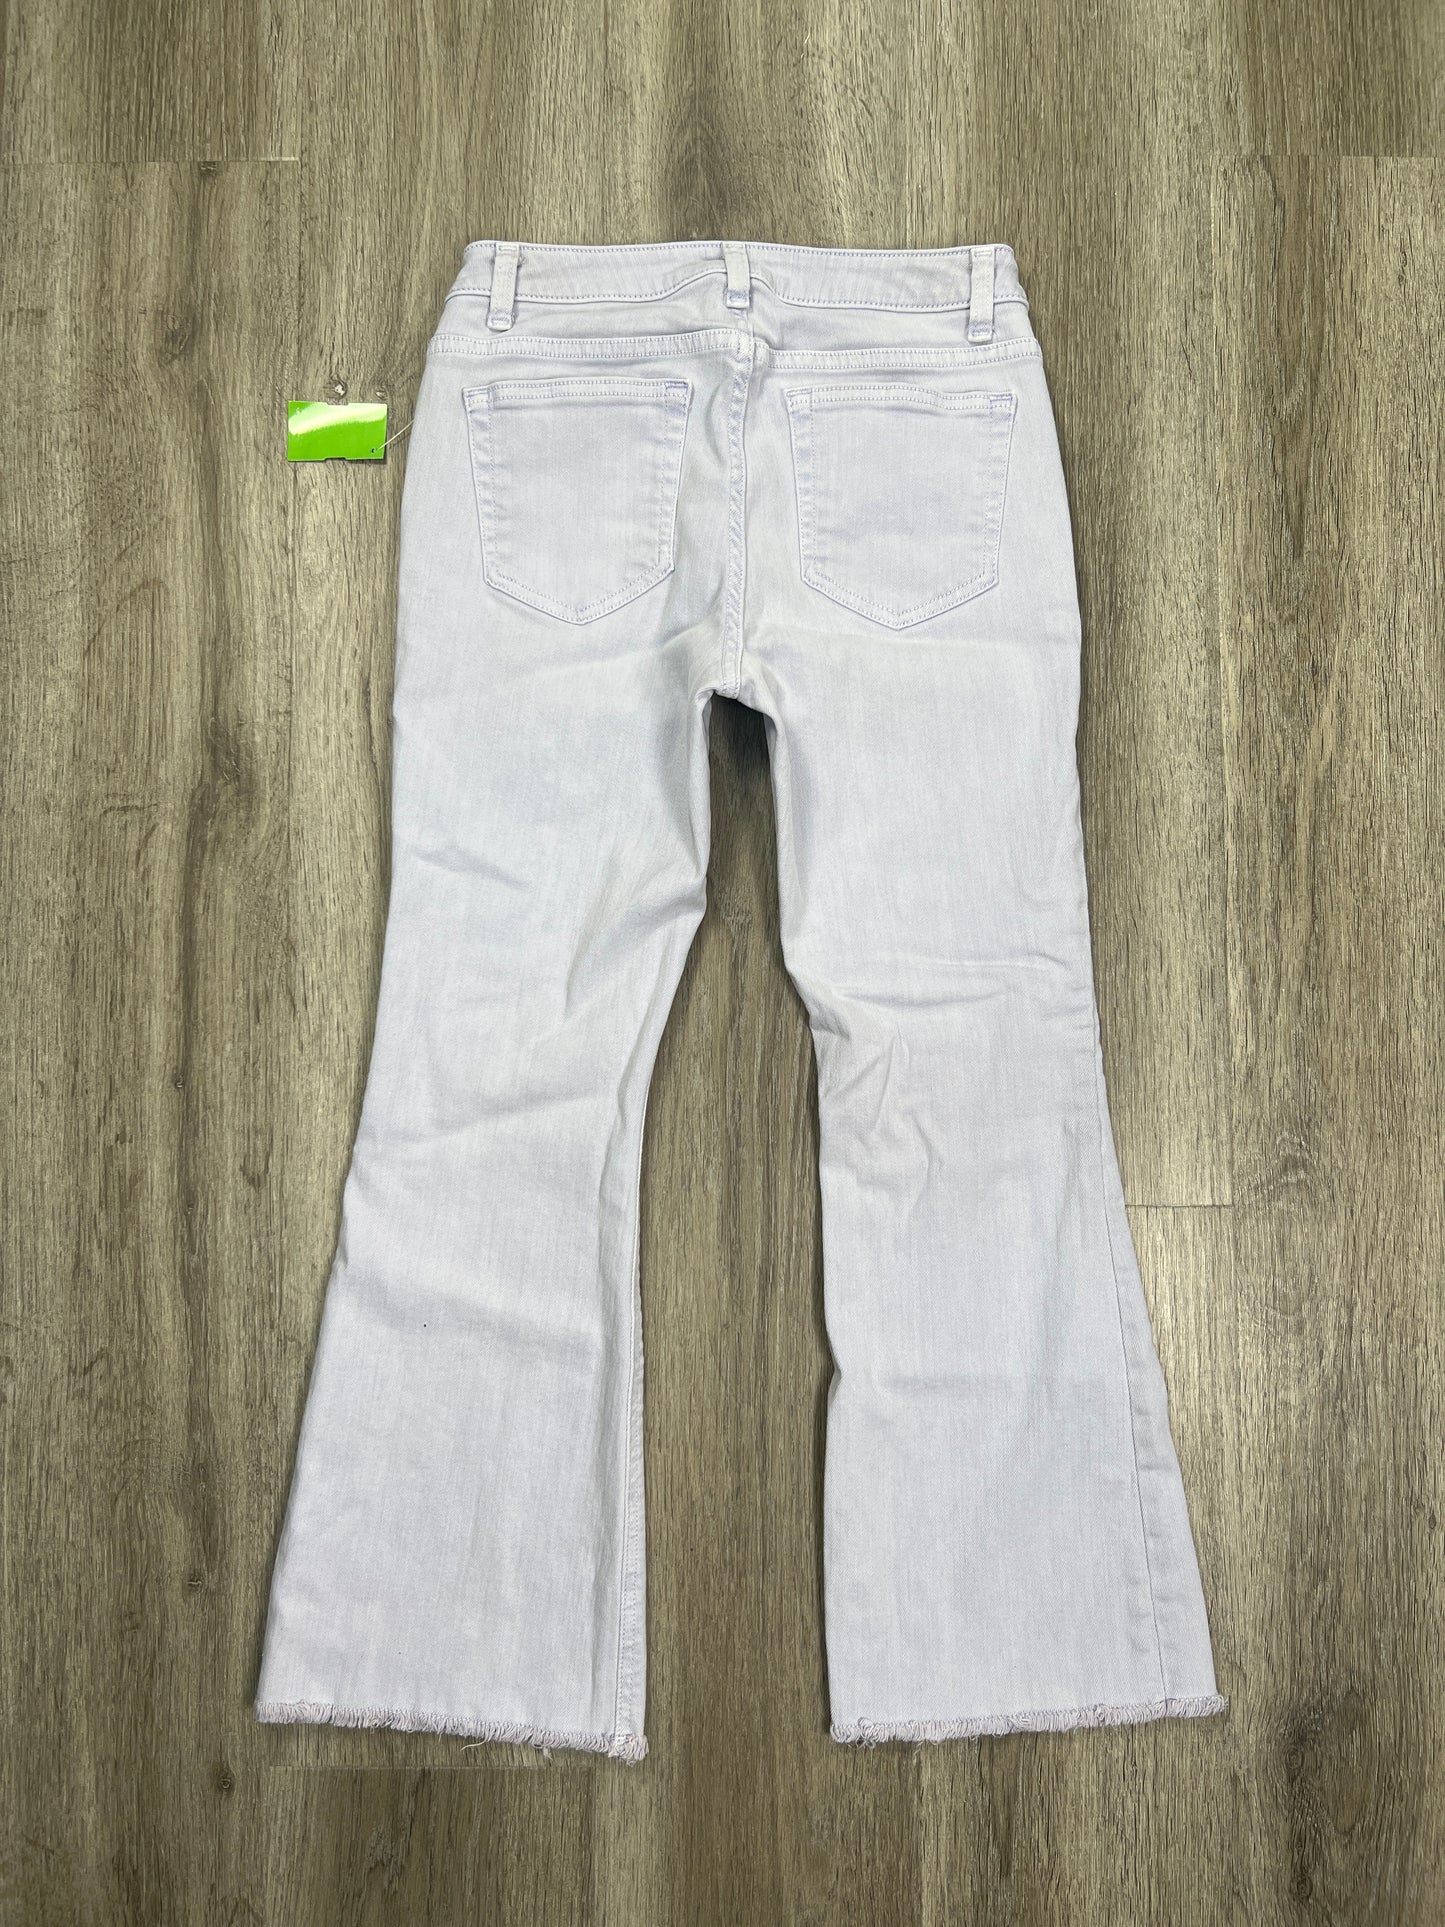 Jeans Designer By Michael Kors  Size: 0